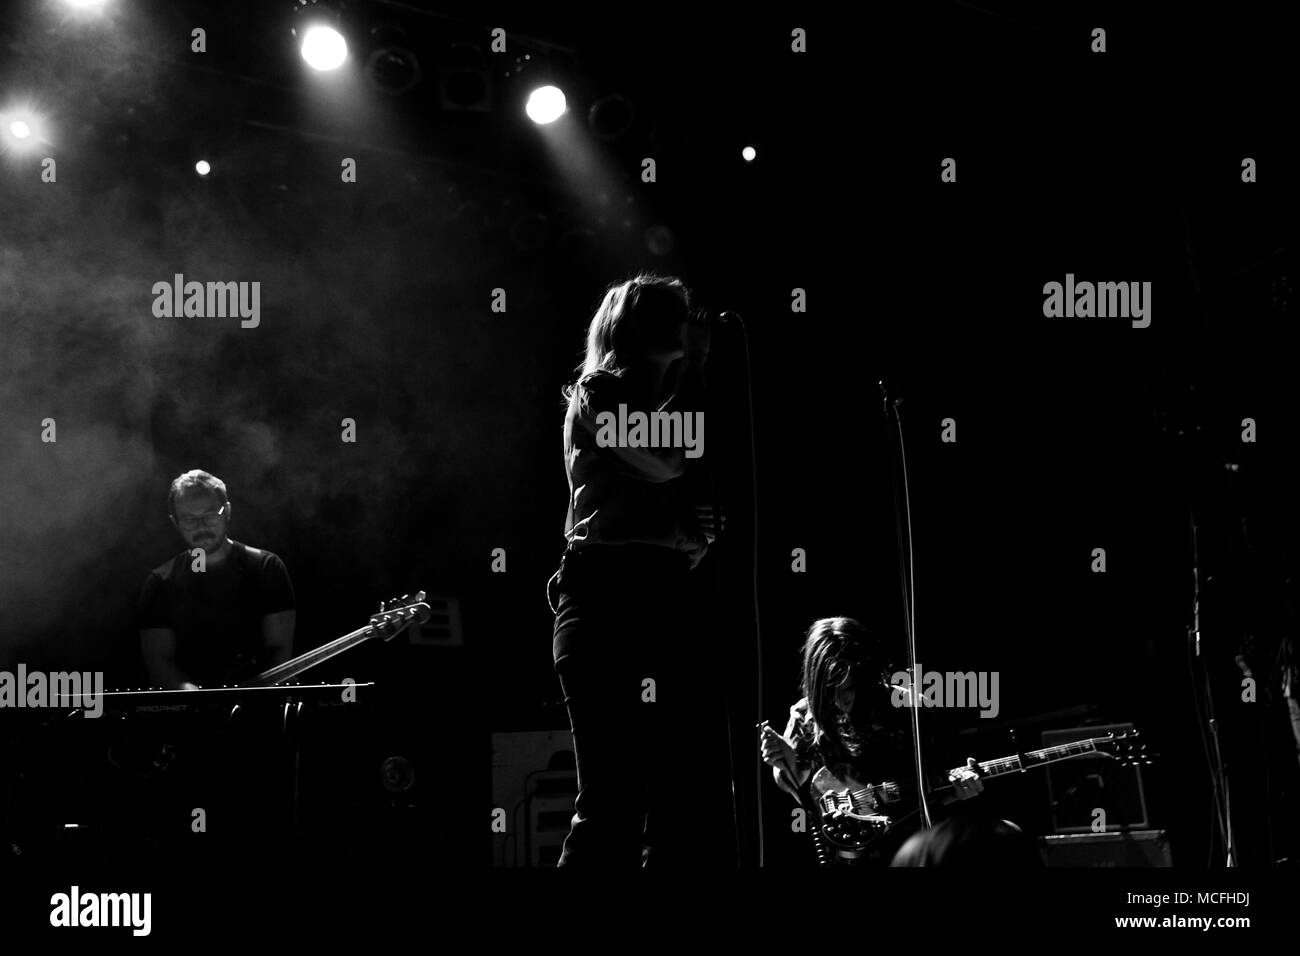 Hamilton rock band Ellevator, performing at The Phoenix Concert Theatre in Toronto. Stock Photo